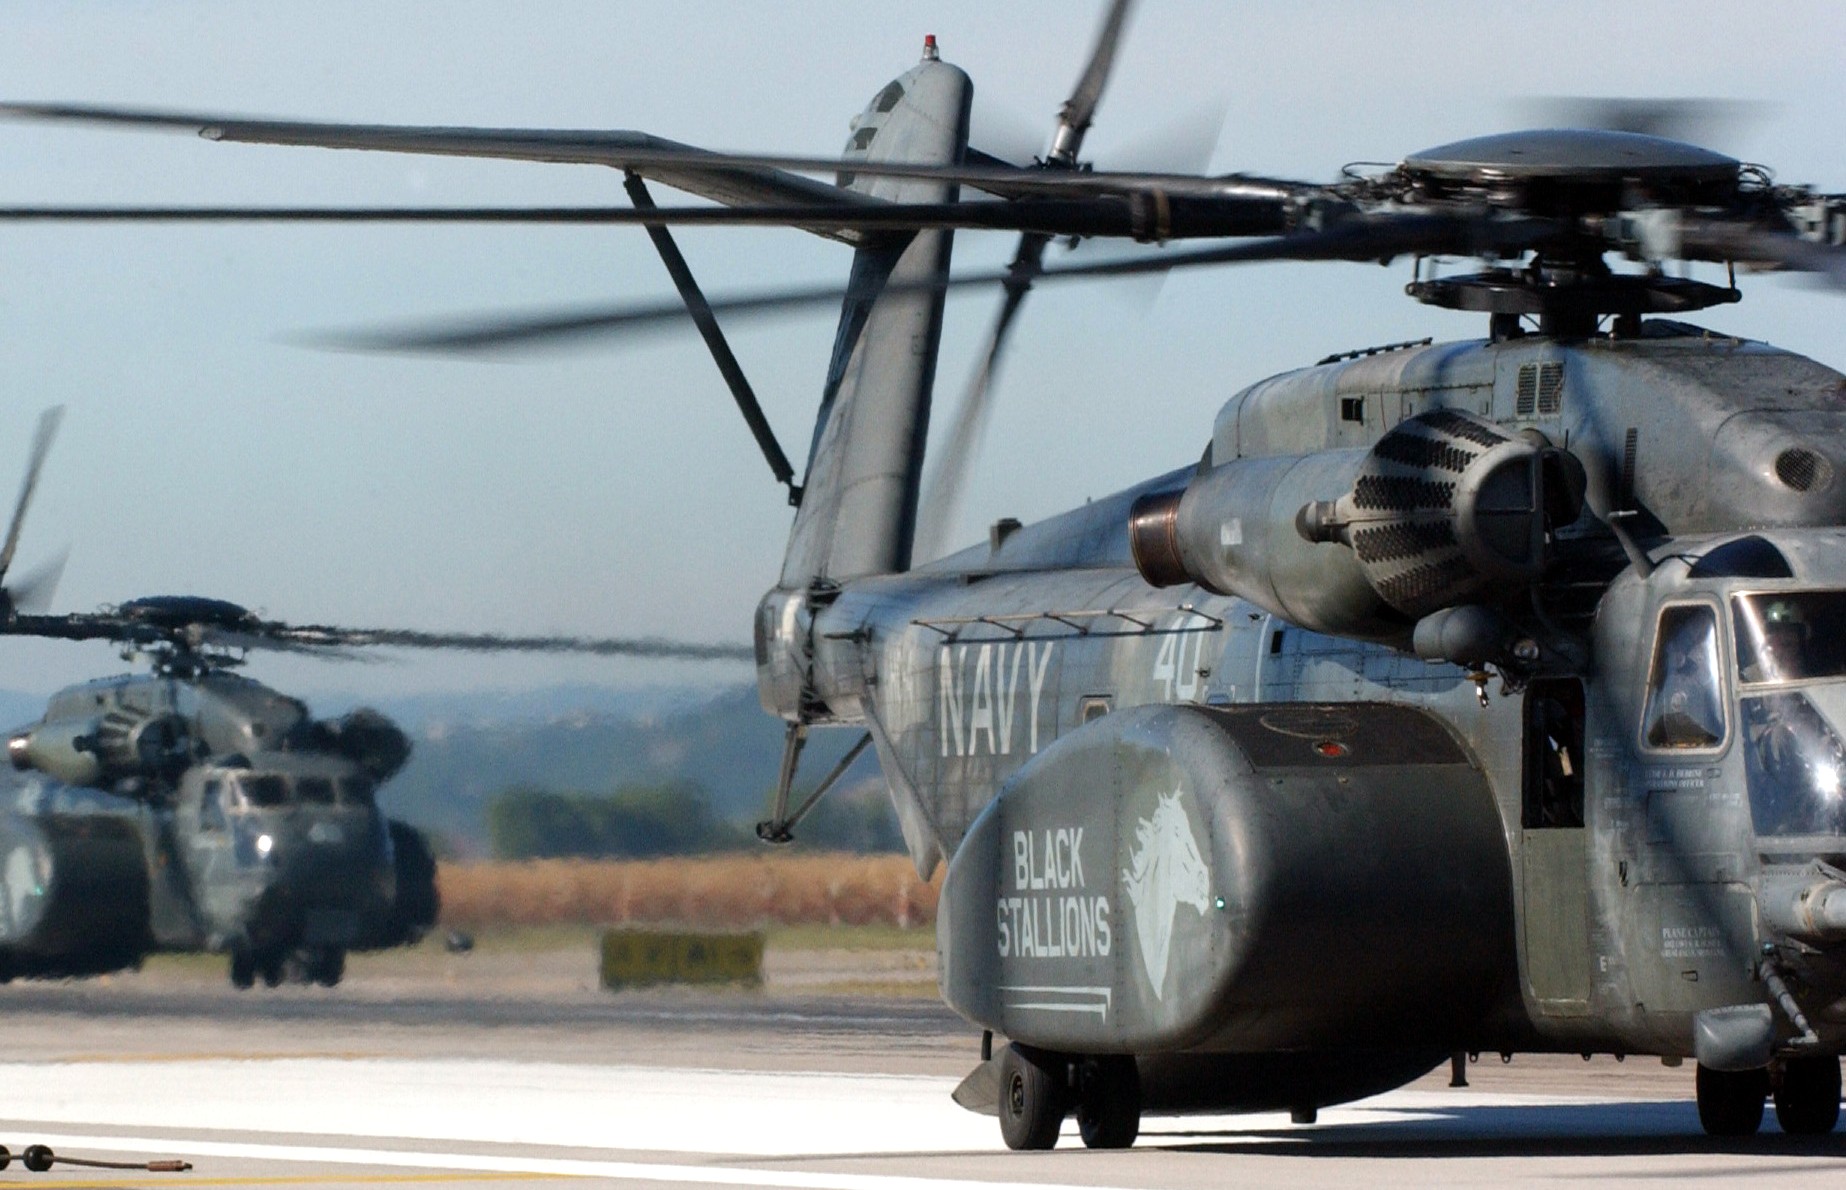 hc-4 black stallions helicopter combat support squadron mh-53e sea dragon 47